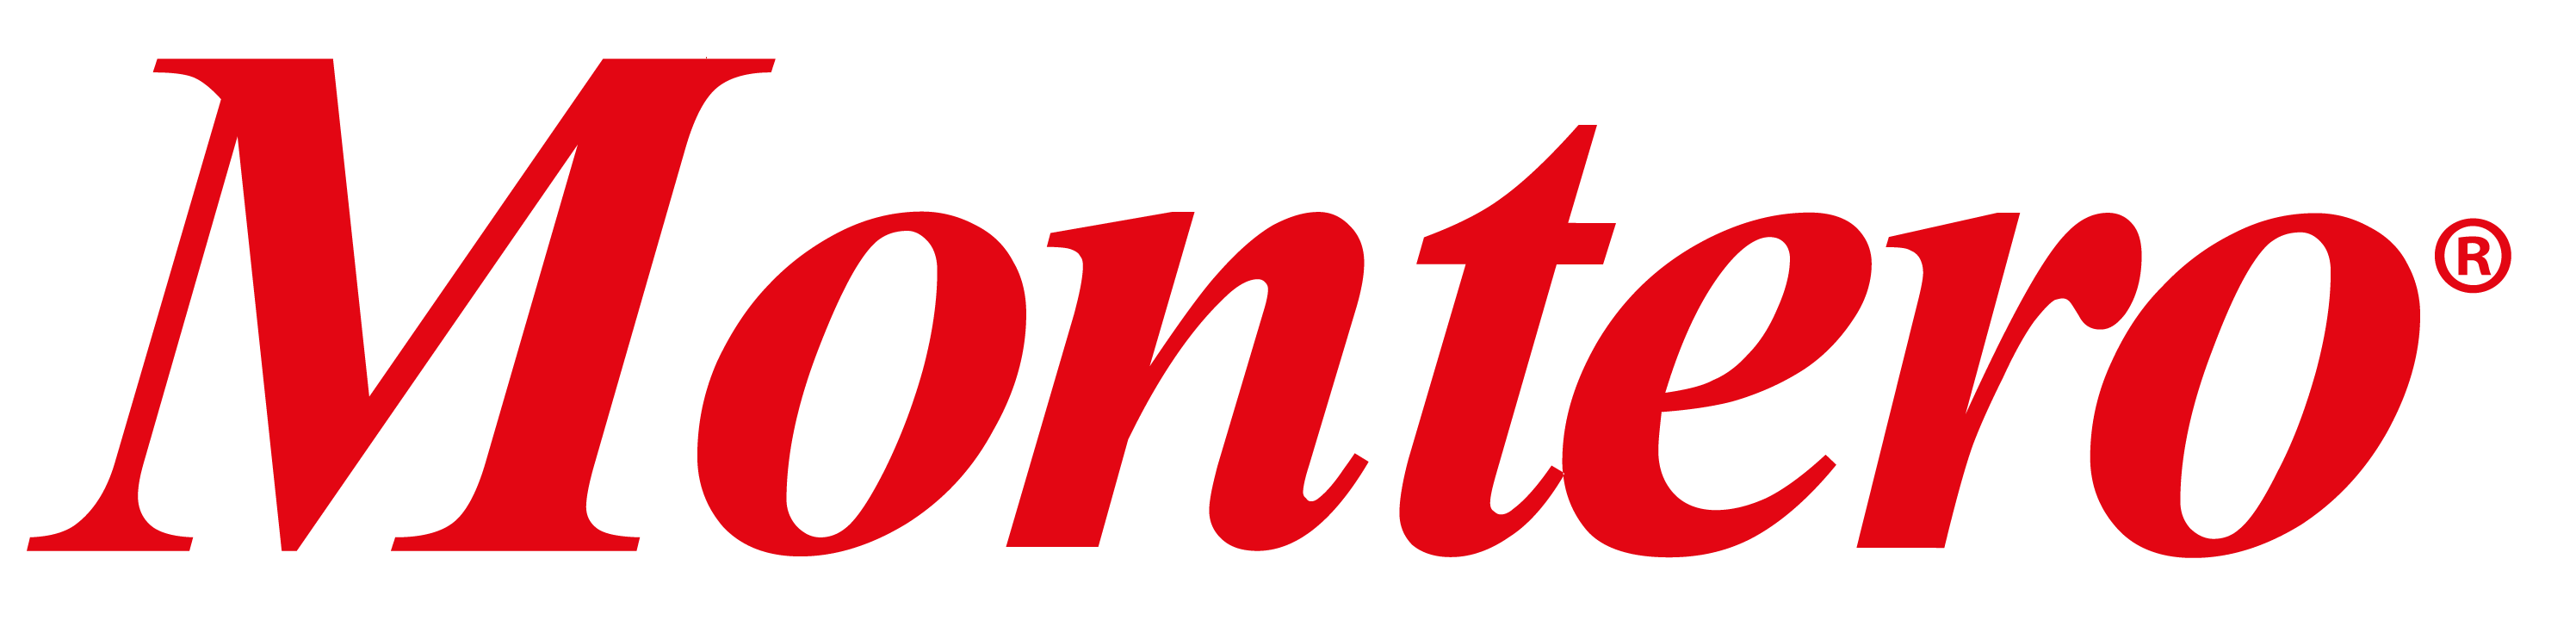 Almacenes Montero Logo